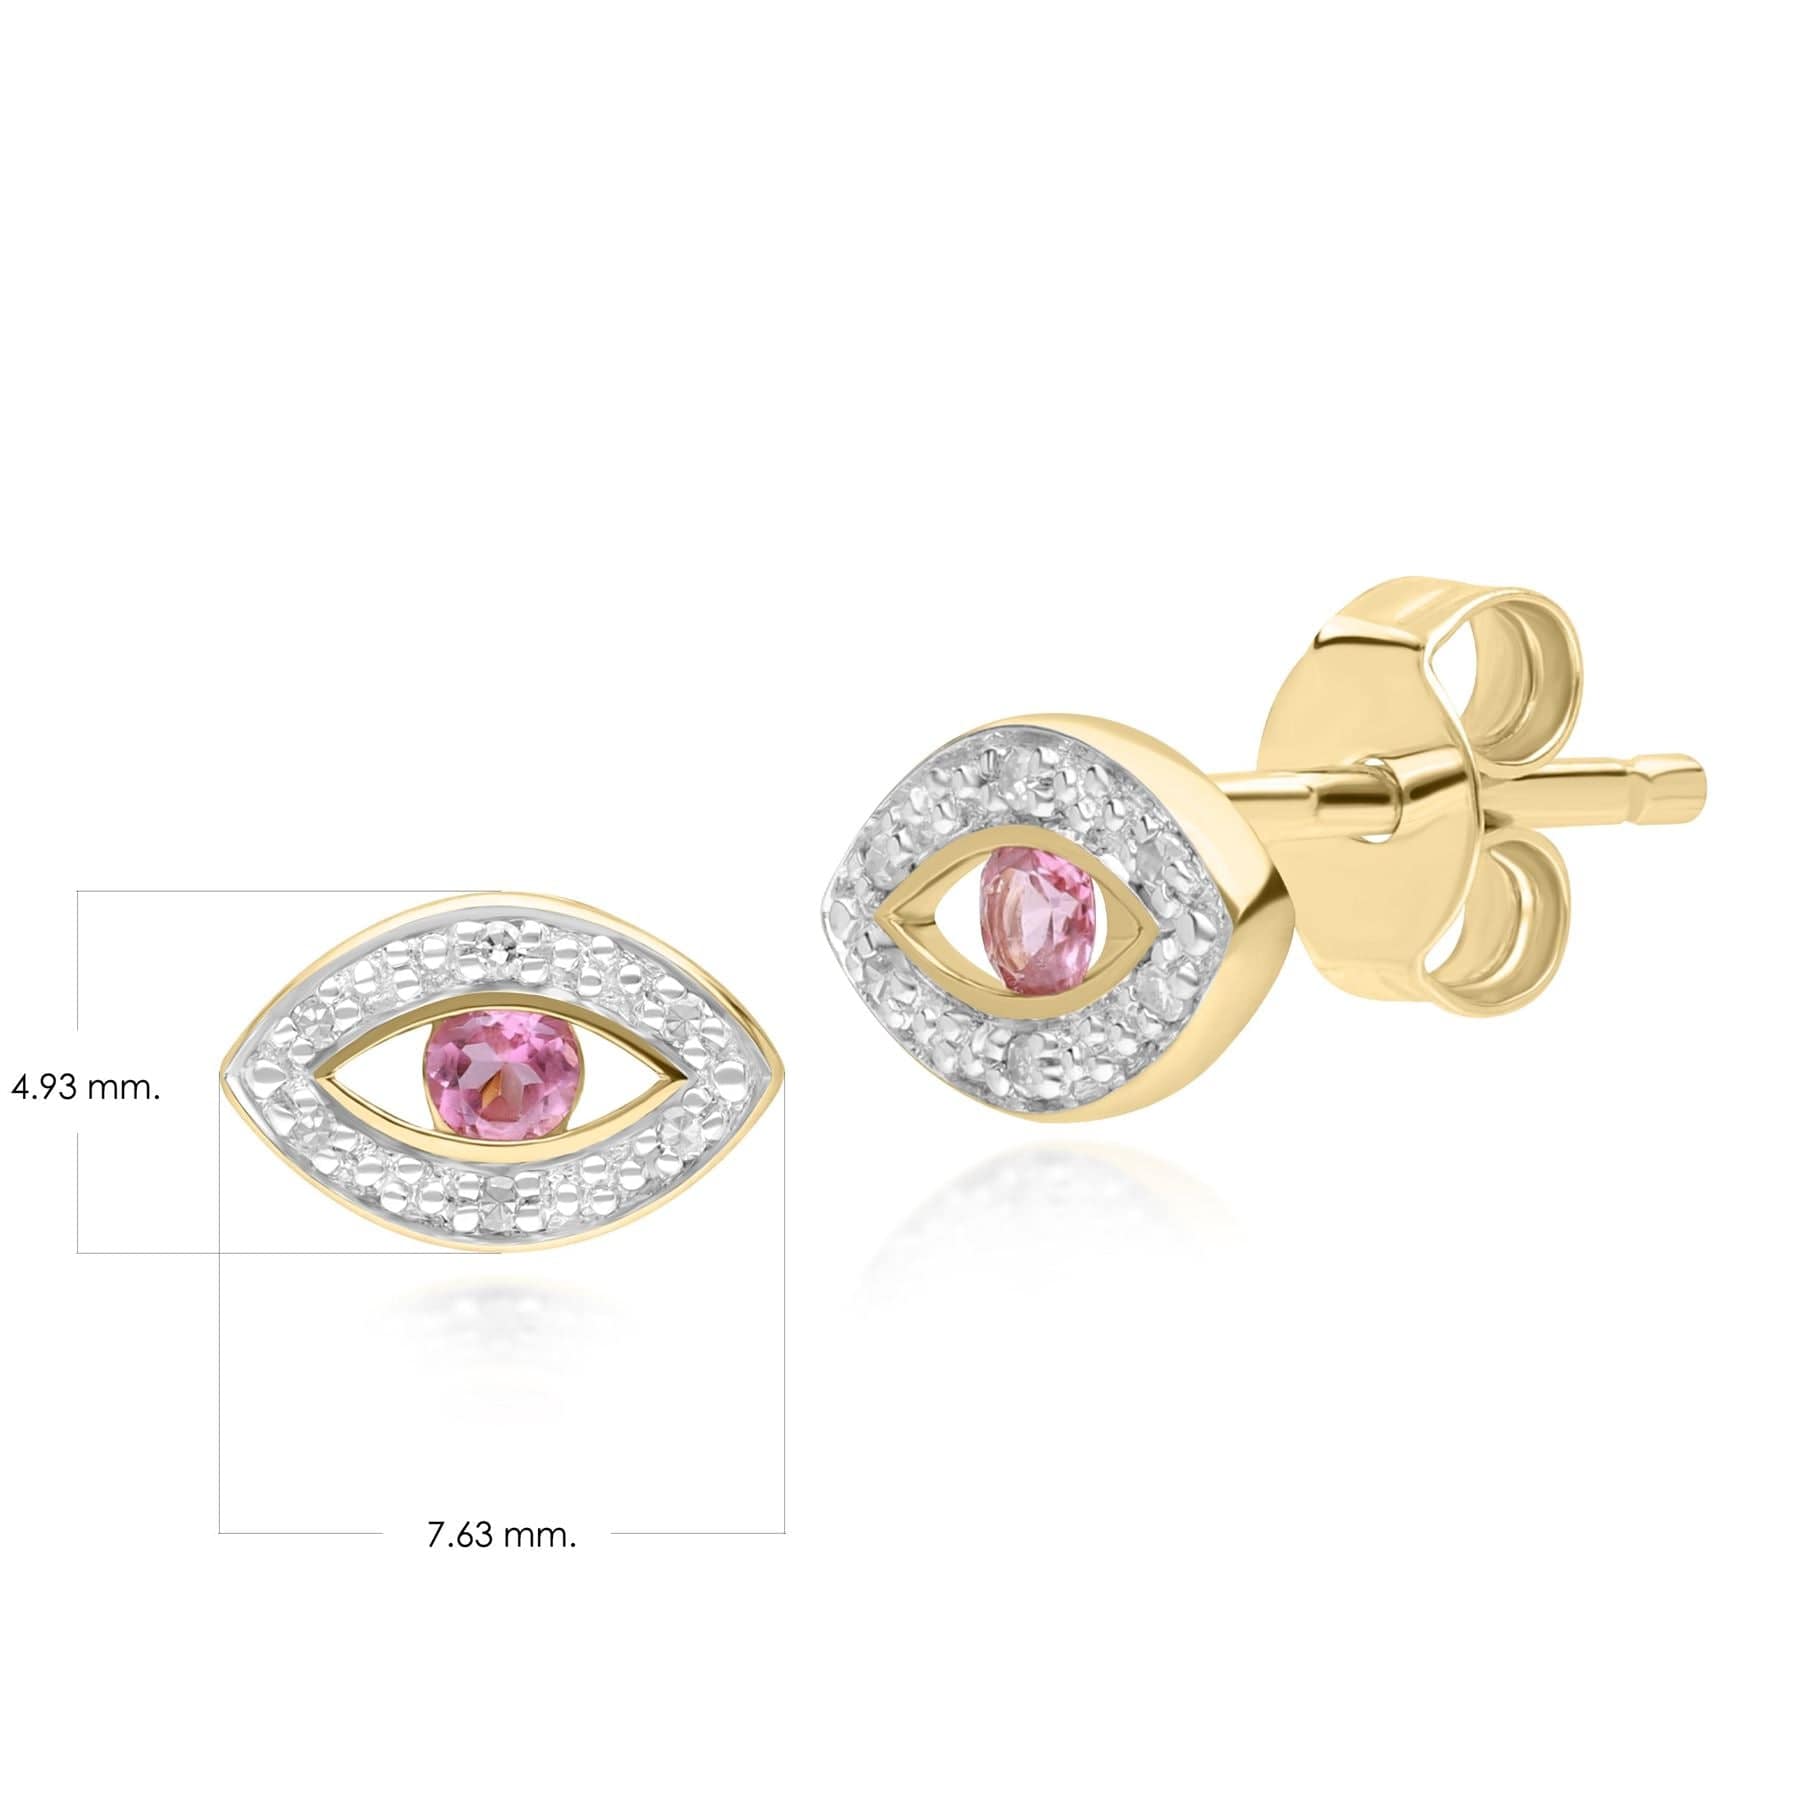 ECFEW™ Dainty Evil Eye Pink Tourmaline & Diamond Stud Earrings in 9ct Yellow Gold - Gemondo